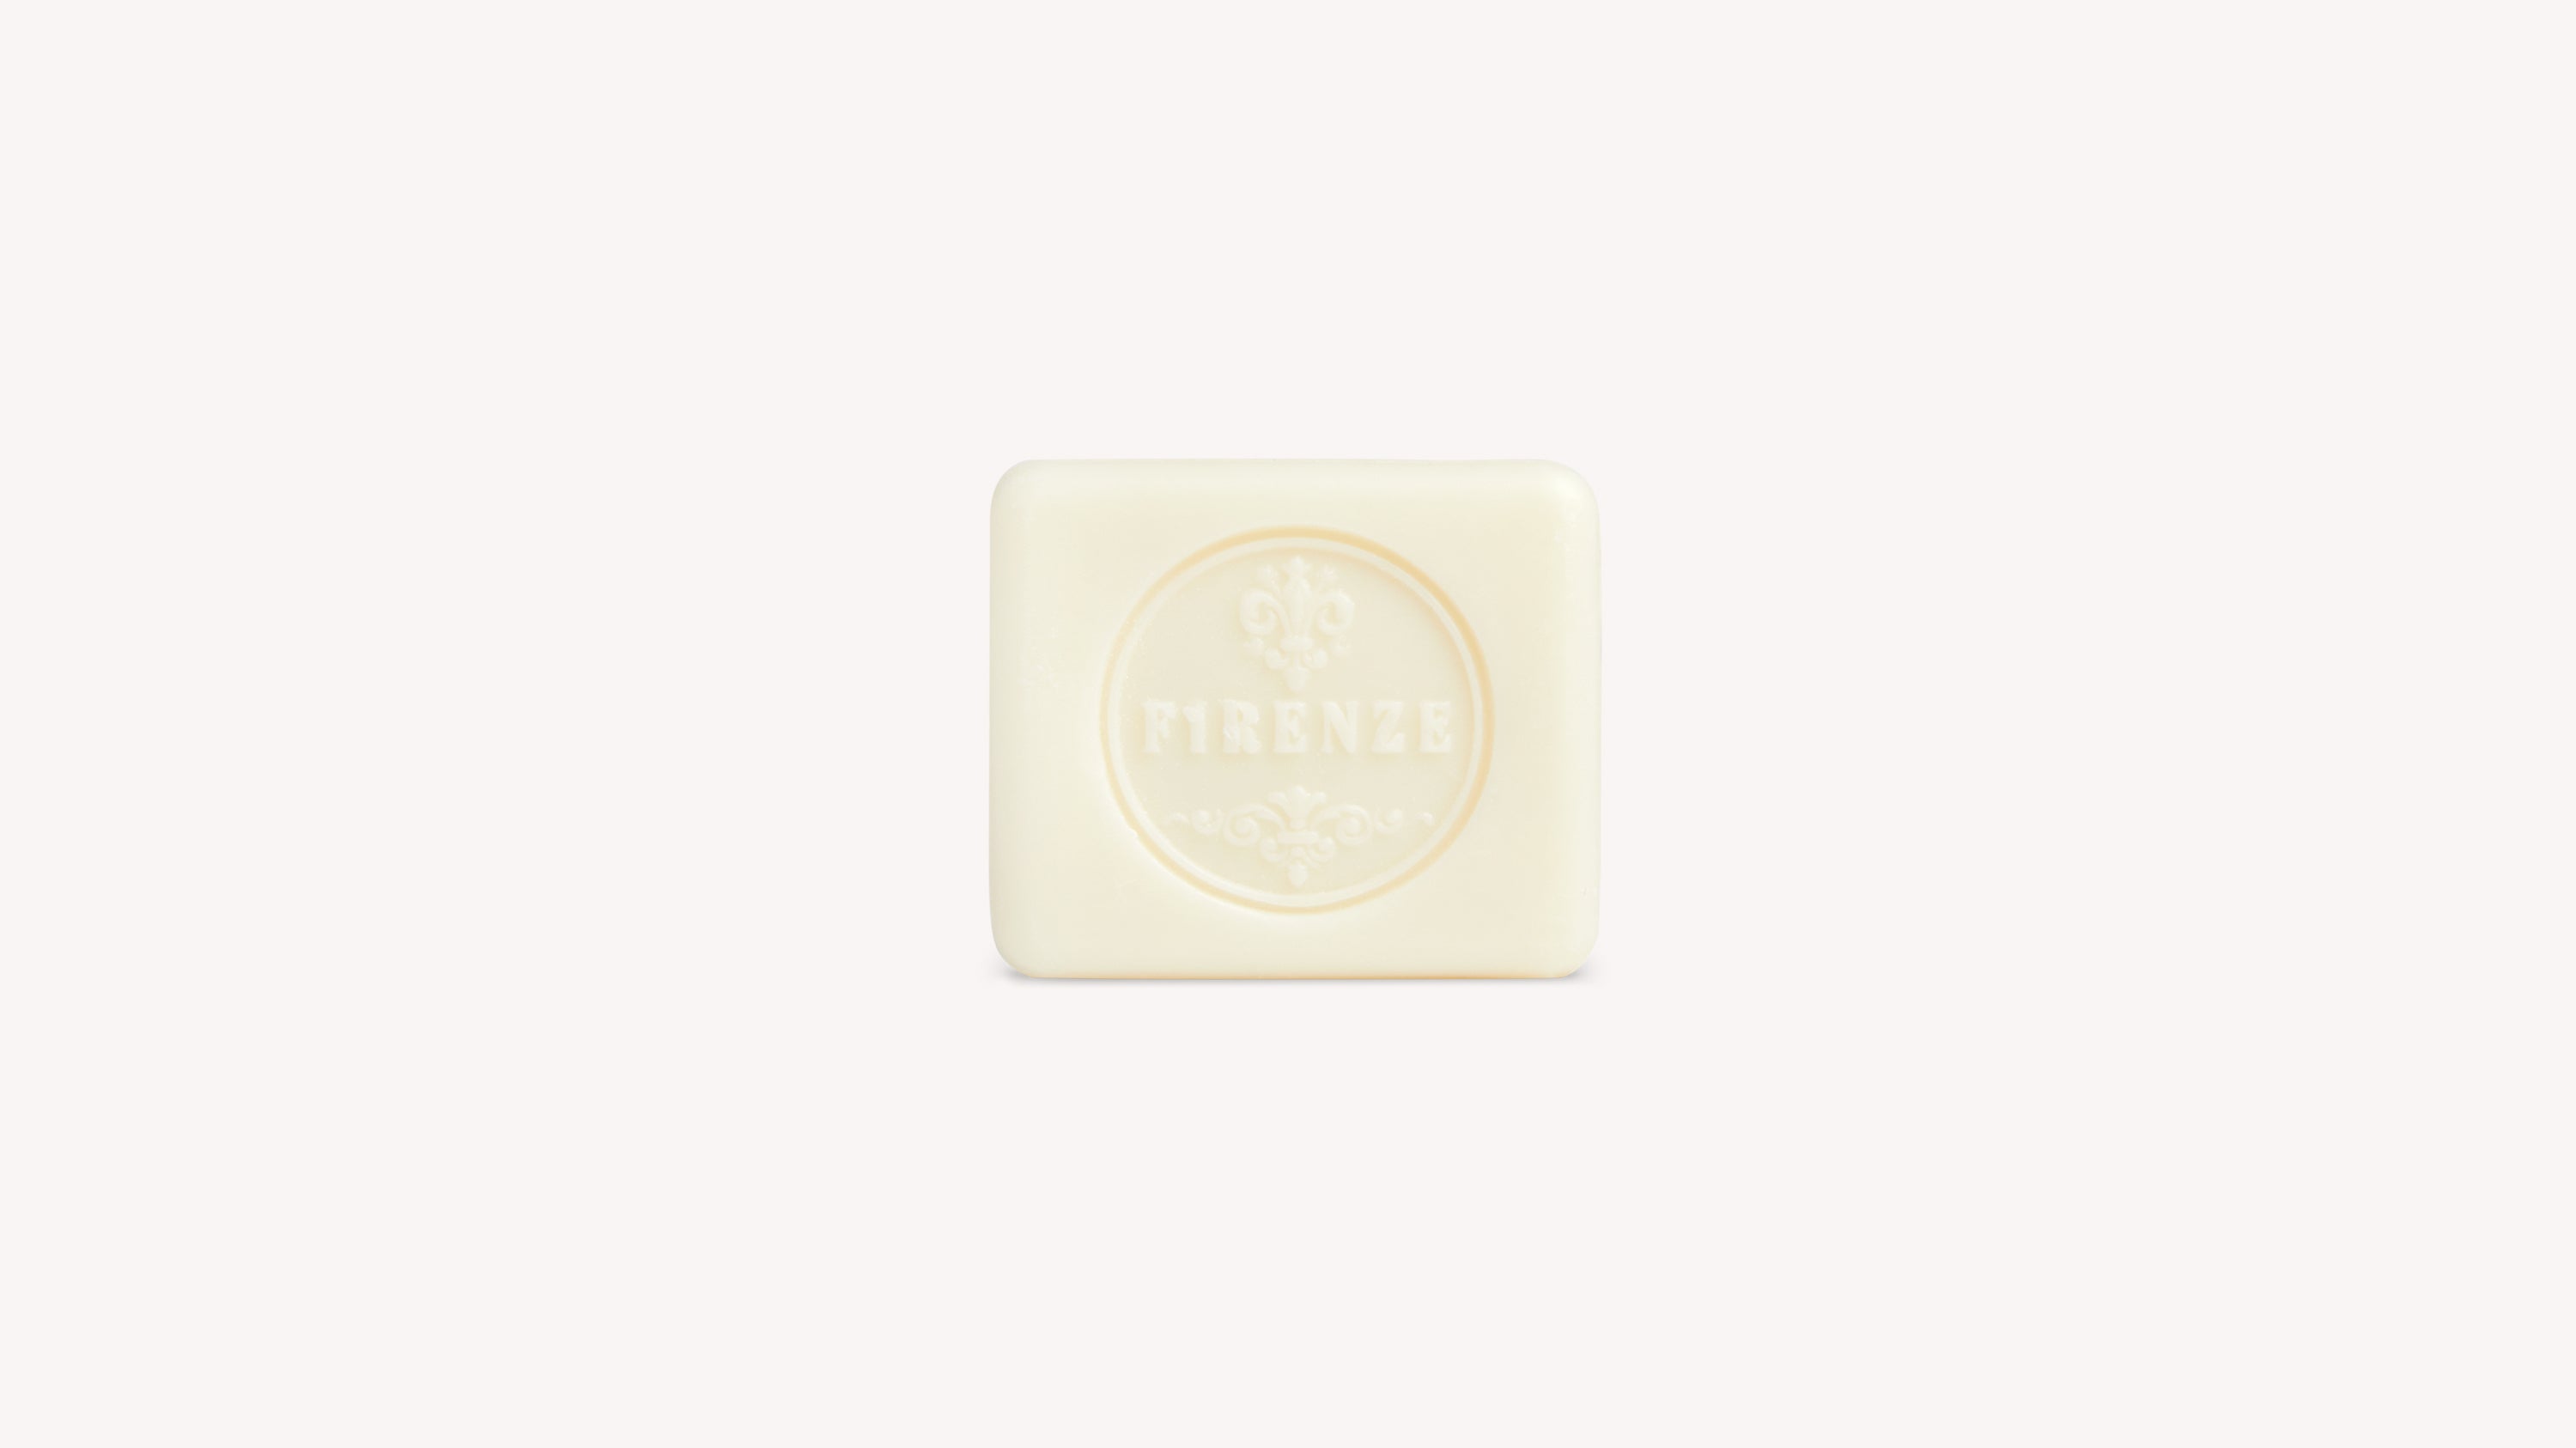 Mint Soap Body Care officina-smn-usa-ca.myshopify.com Officina Profumo Farmaceutica di Santa Maria Novella - US